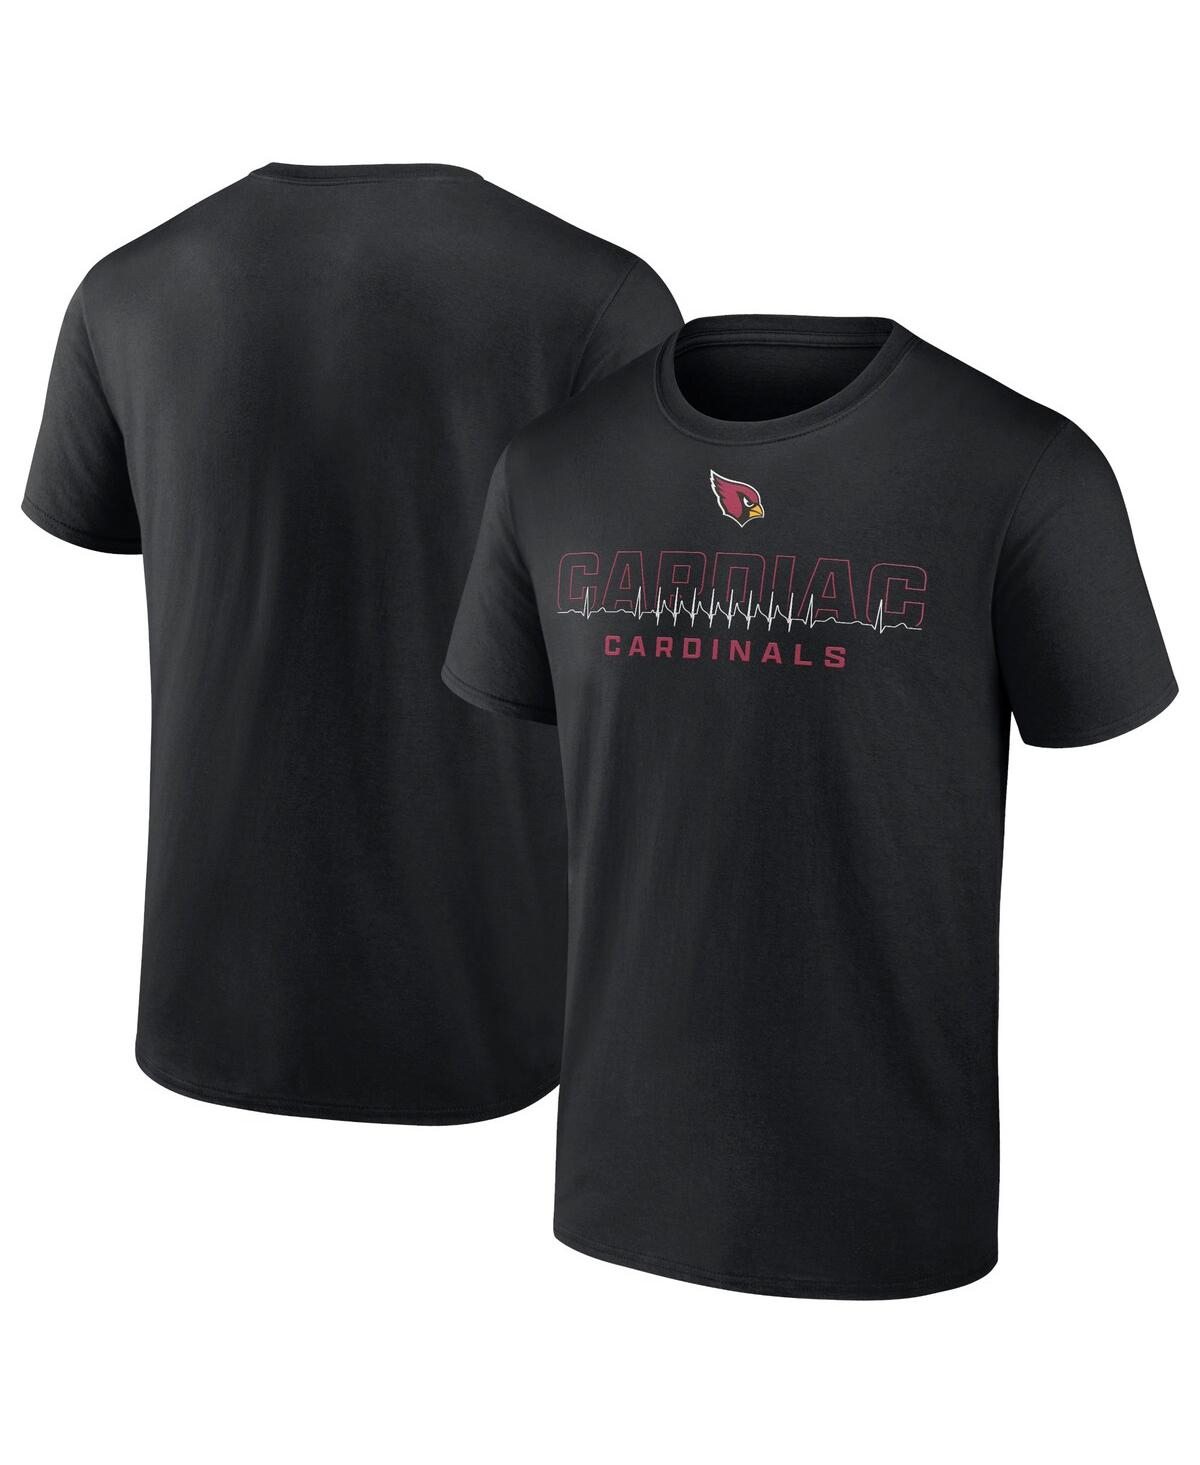 Shop Fanatics Men's  Black Arizona Cardinals Heartbeat T-shirt